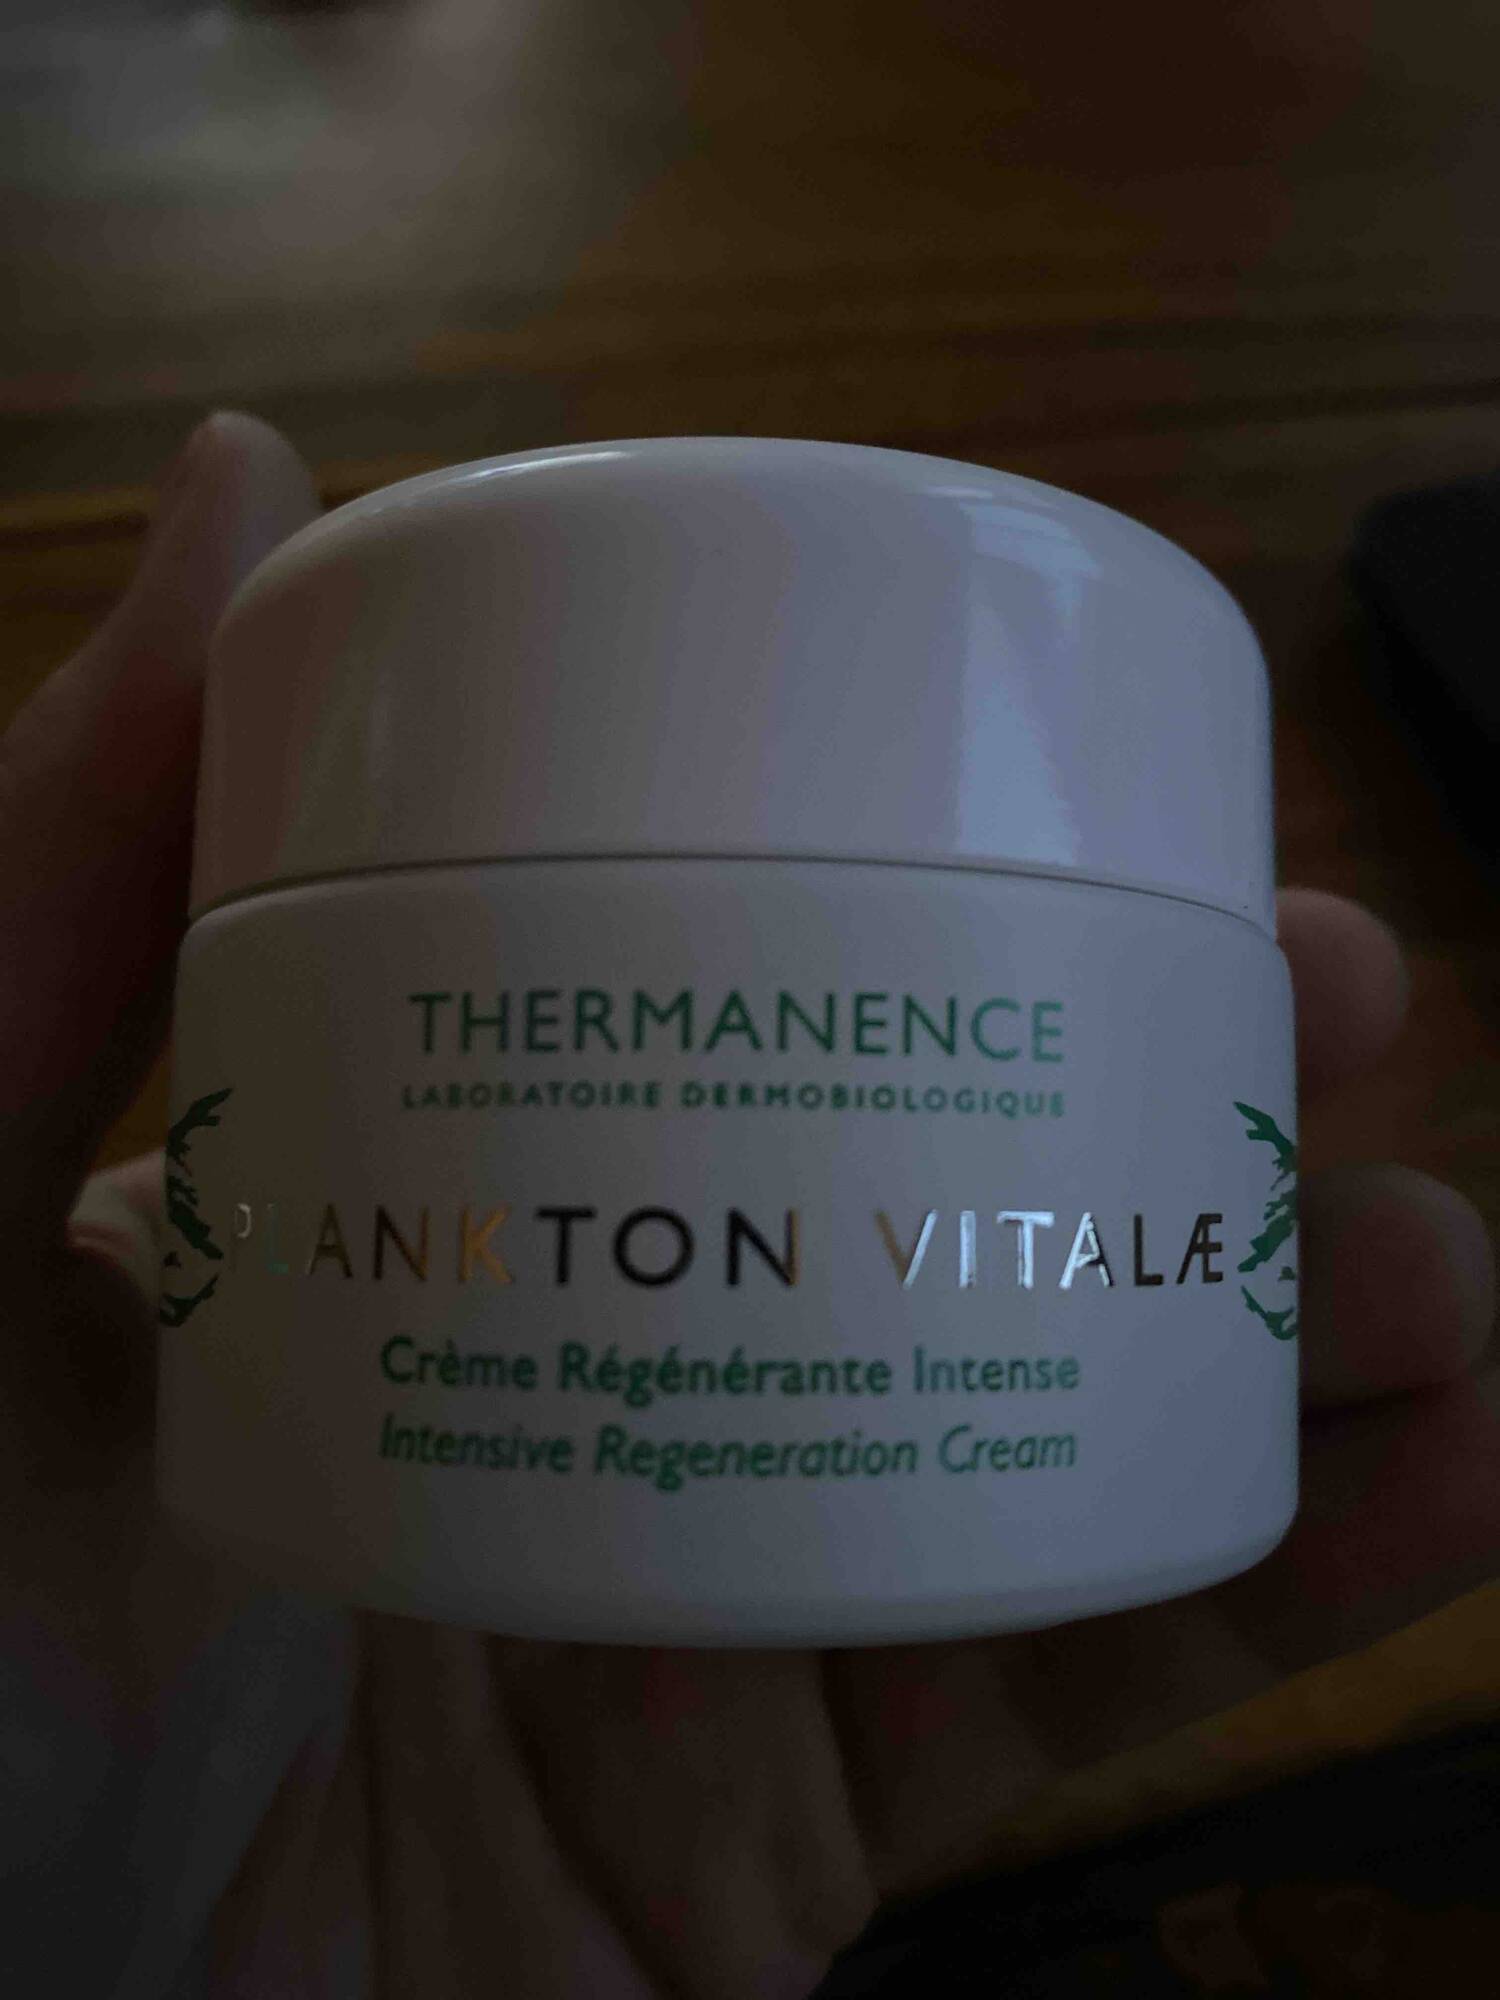 THERMANENCE - Plankton vitalae - Crème régénérante intense